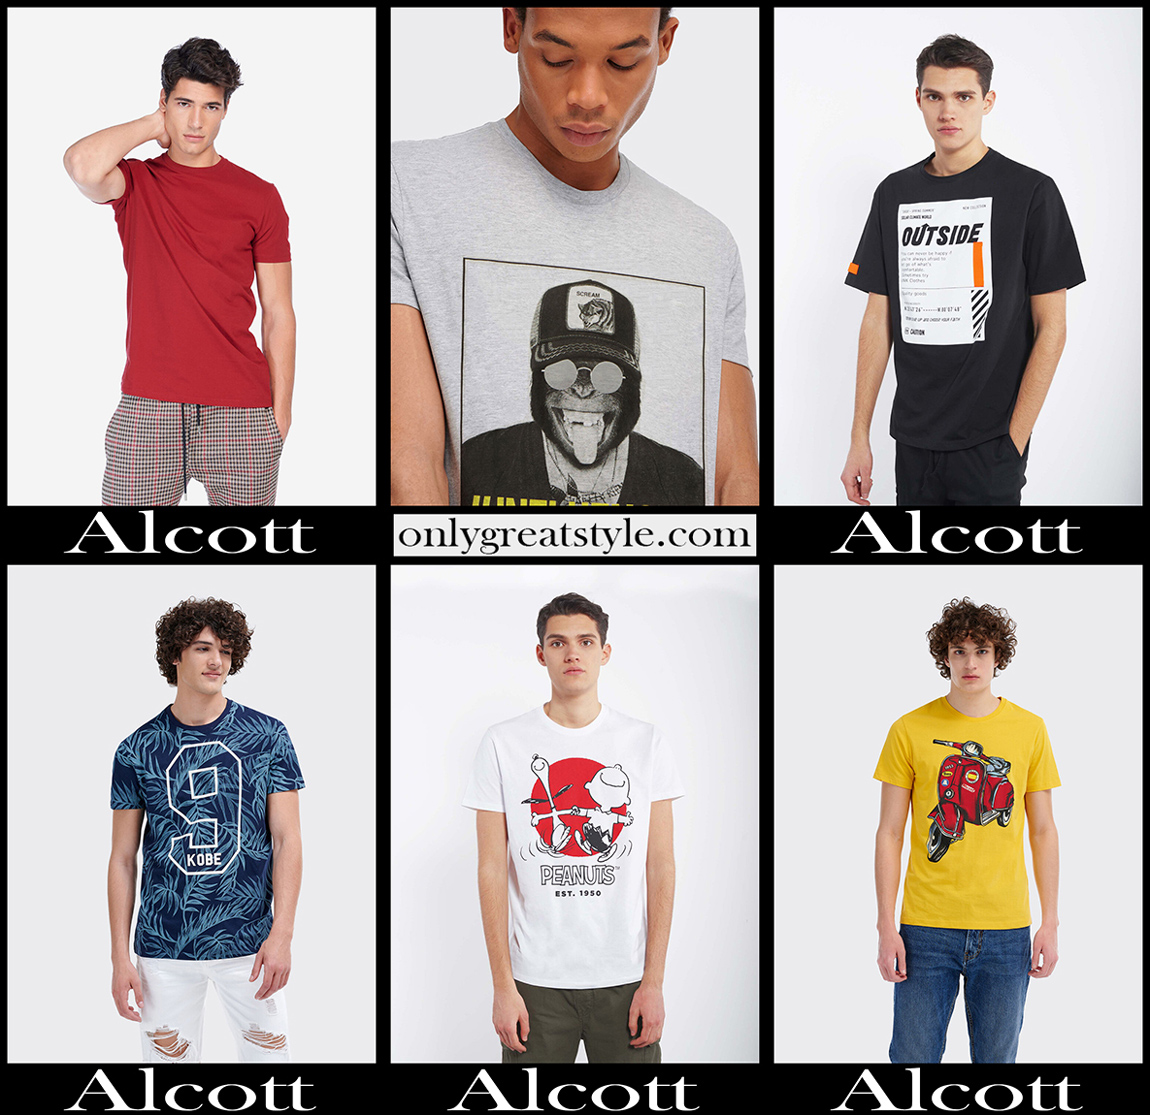 Alcott t shirts 2020 mens fashion new arrivals clothing